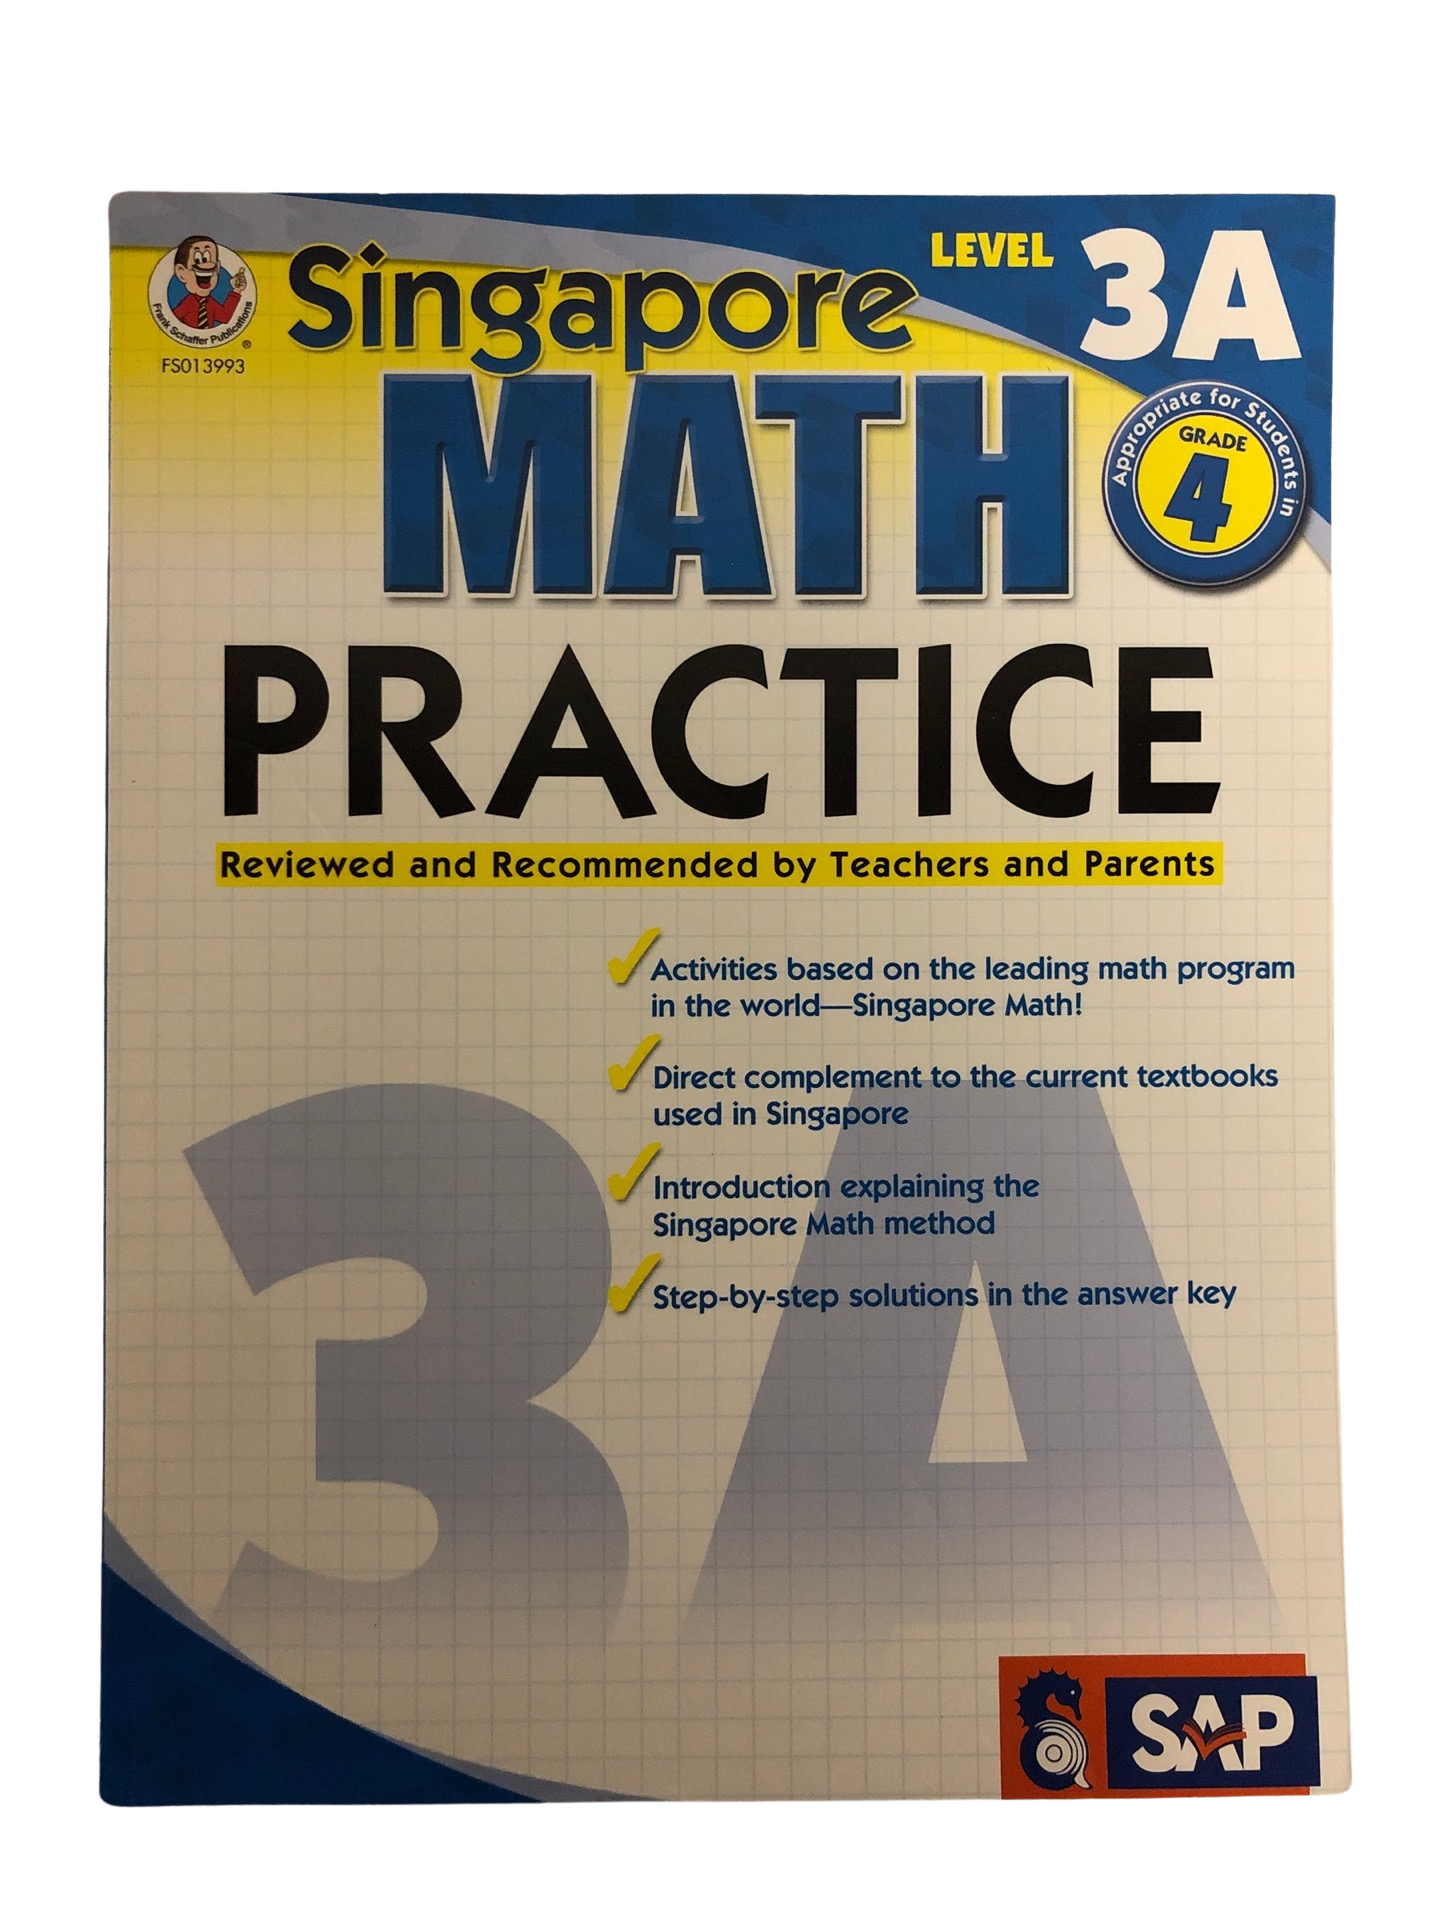 Singapore Math Practice (Level 3A) 4th Grade